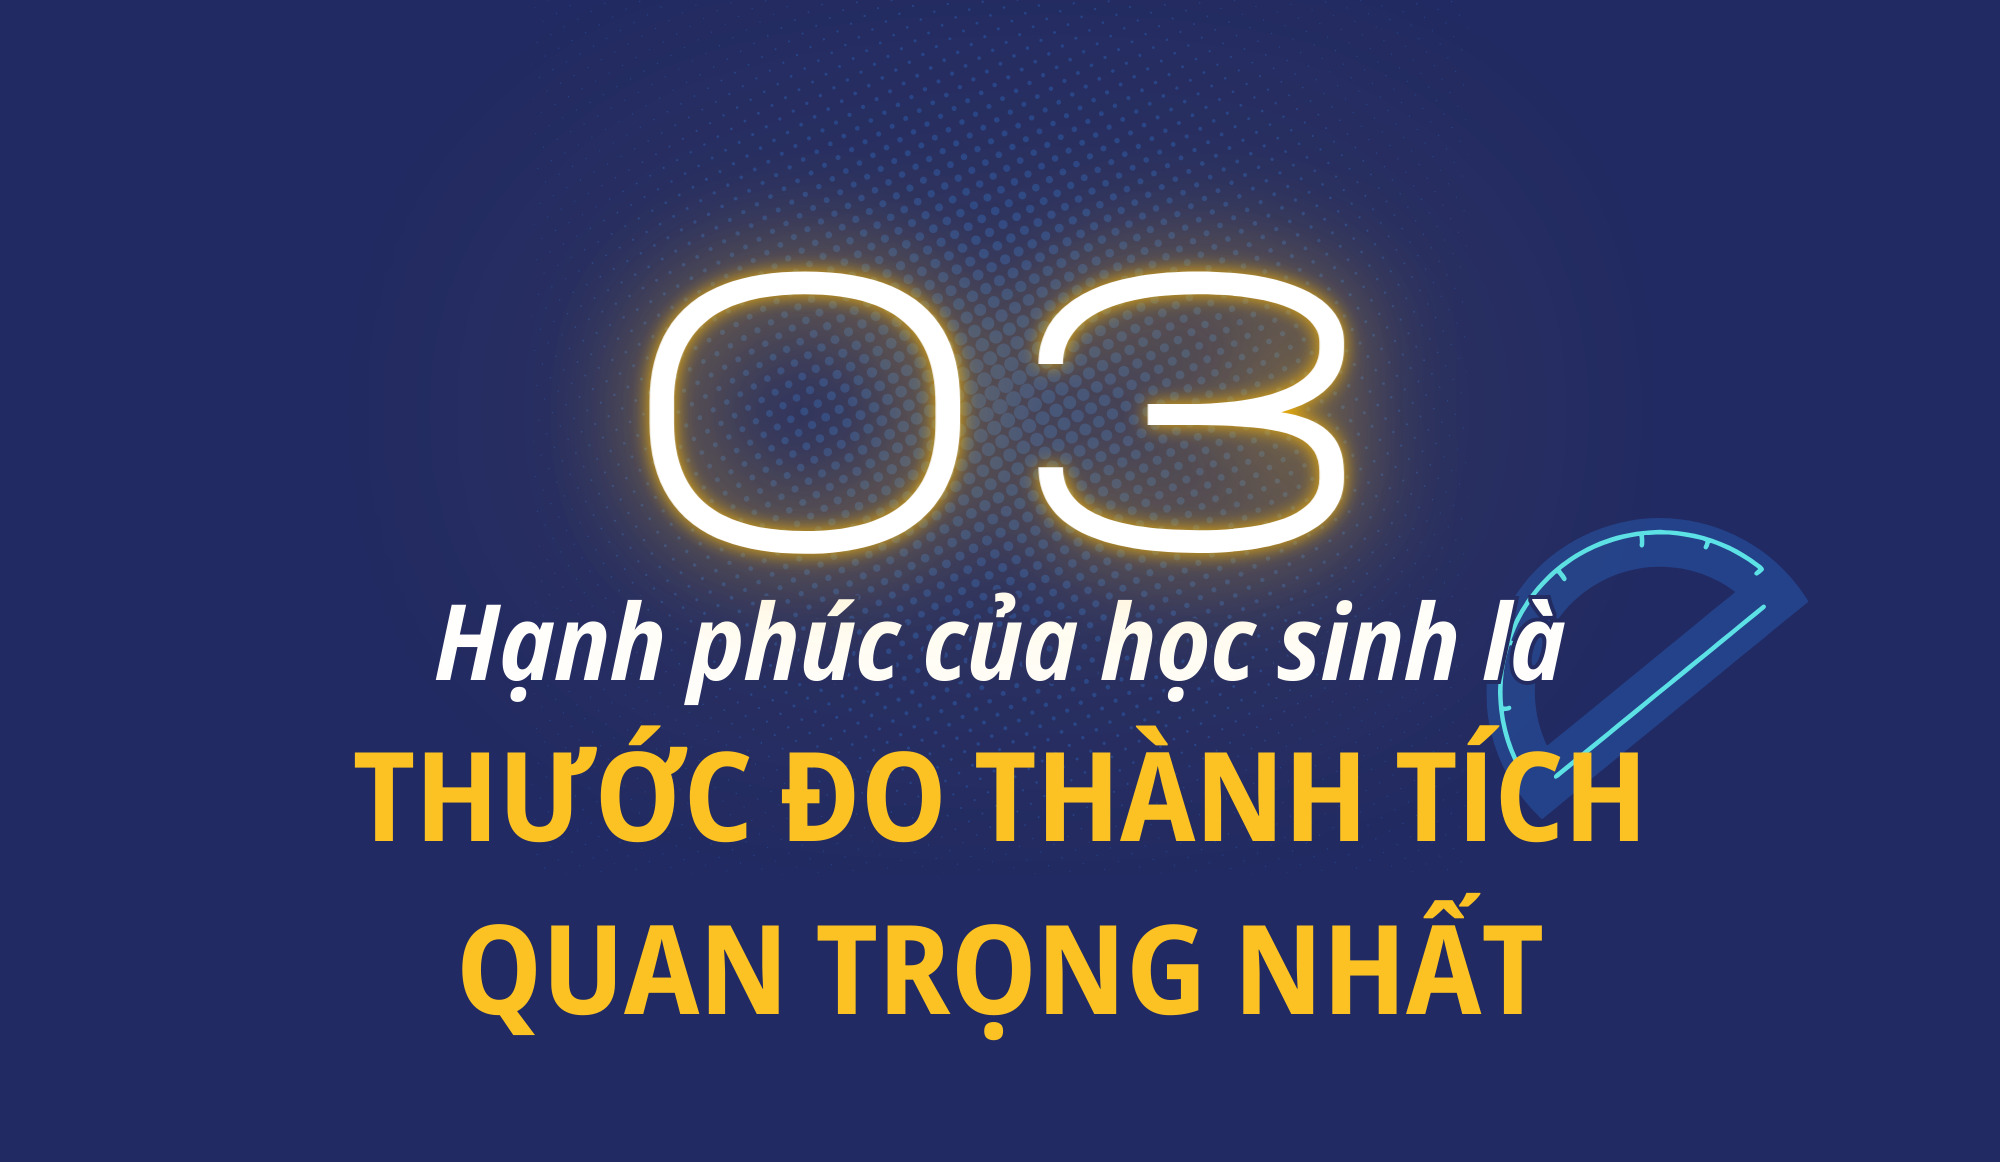 TRUONG HOC HANH PHUC THUC NGHIEM VICTORY (1)